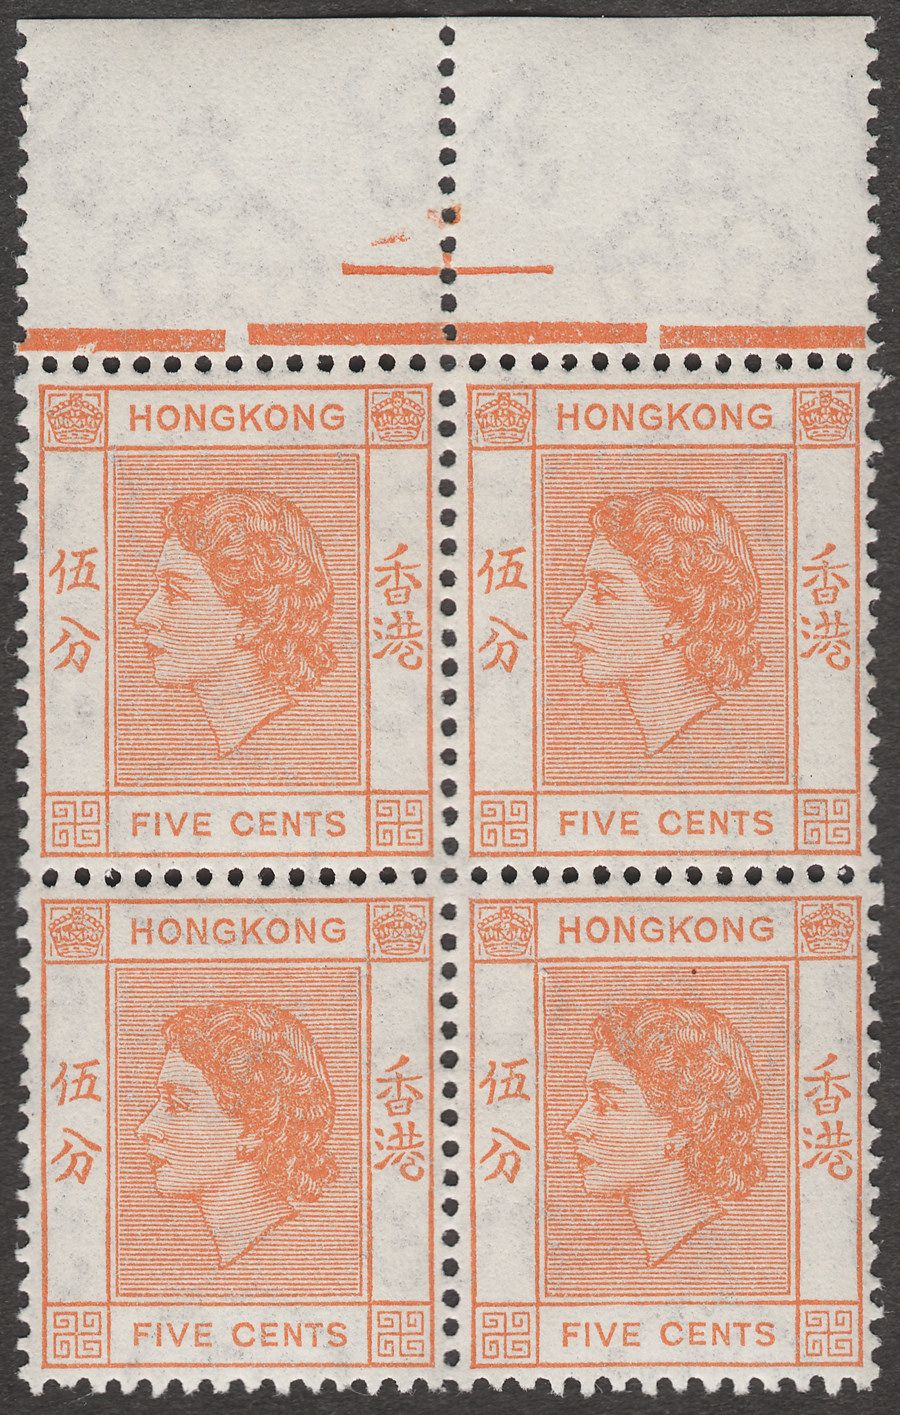 Hong Kong 1954 QEII 5c Orange with Variety Damaged Pearl in Mint Block SG178v